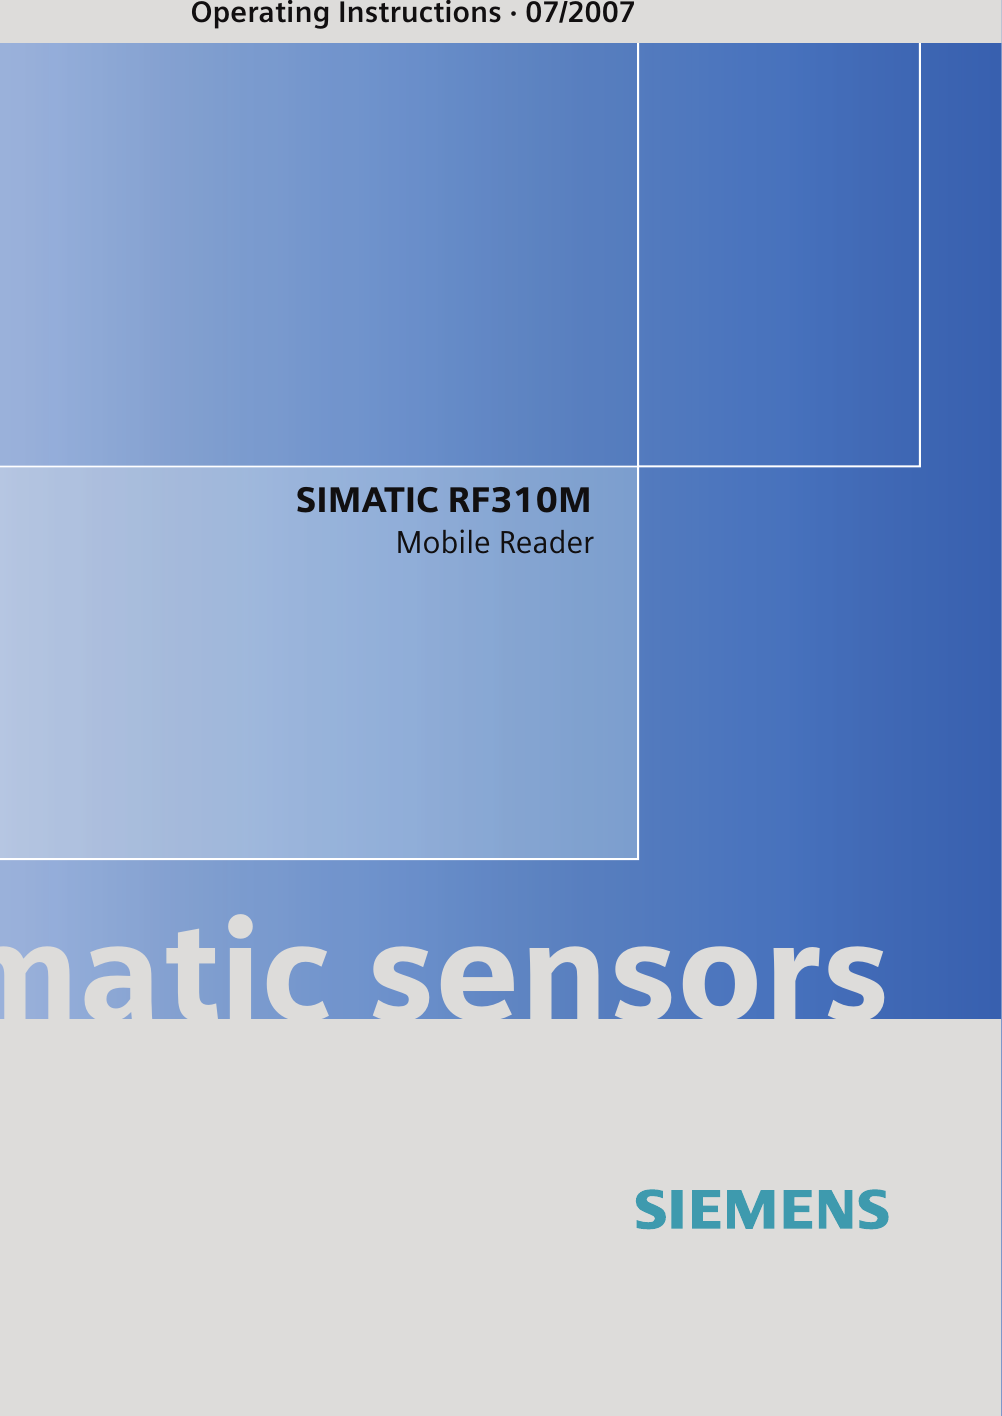 RFID Systems SIMATIC RF310M Mobile Reader DOCUMENTATIONDOCUMENTATIONOperating Instructions · 07/2007Mobile Reader SIMATIC RF310Msimatic sensors